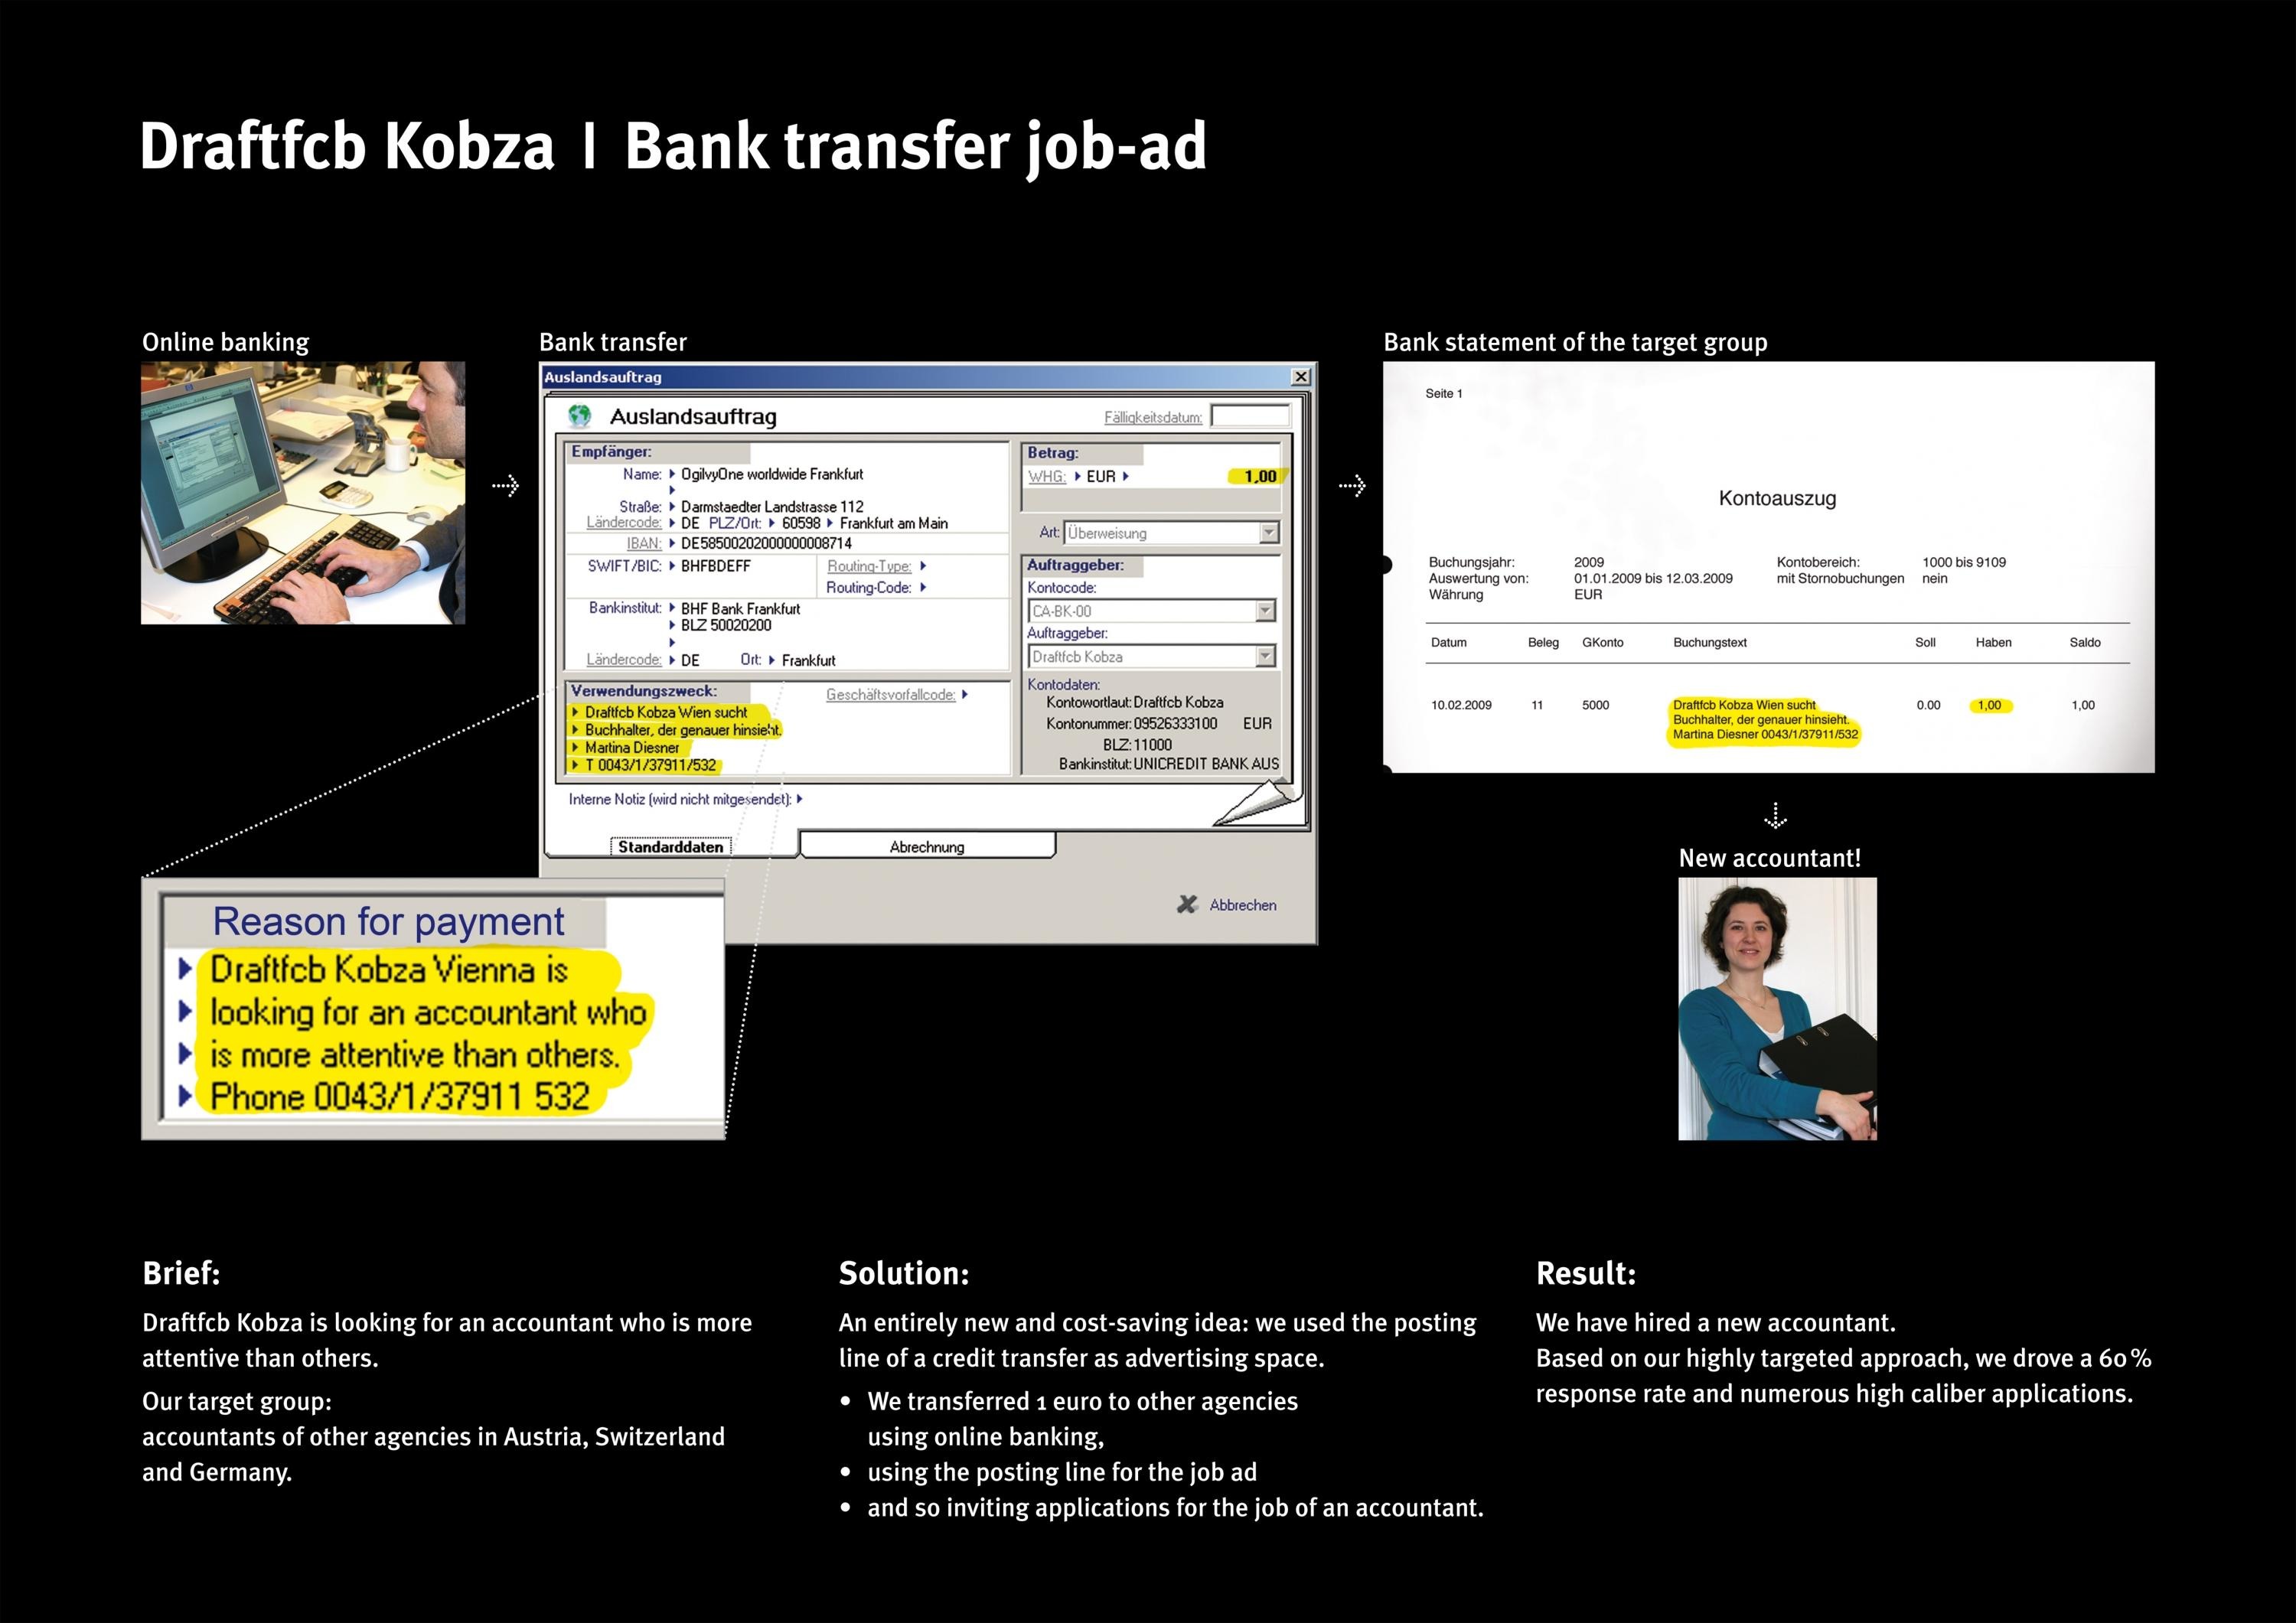 BANK TRANSFER JOB-AD